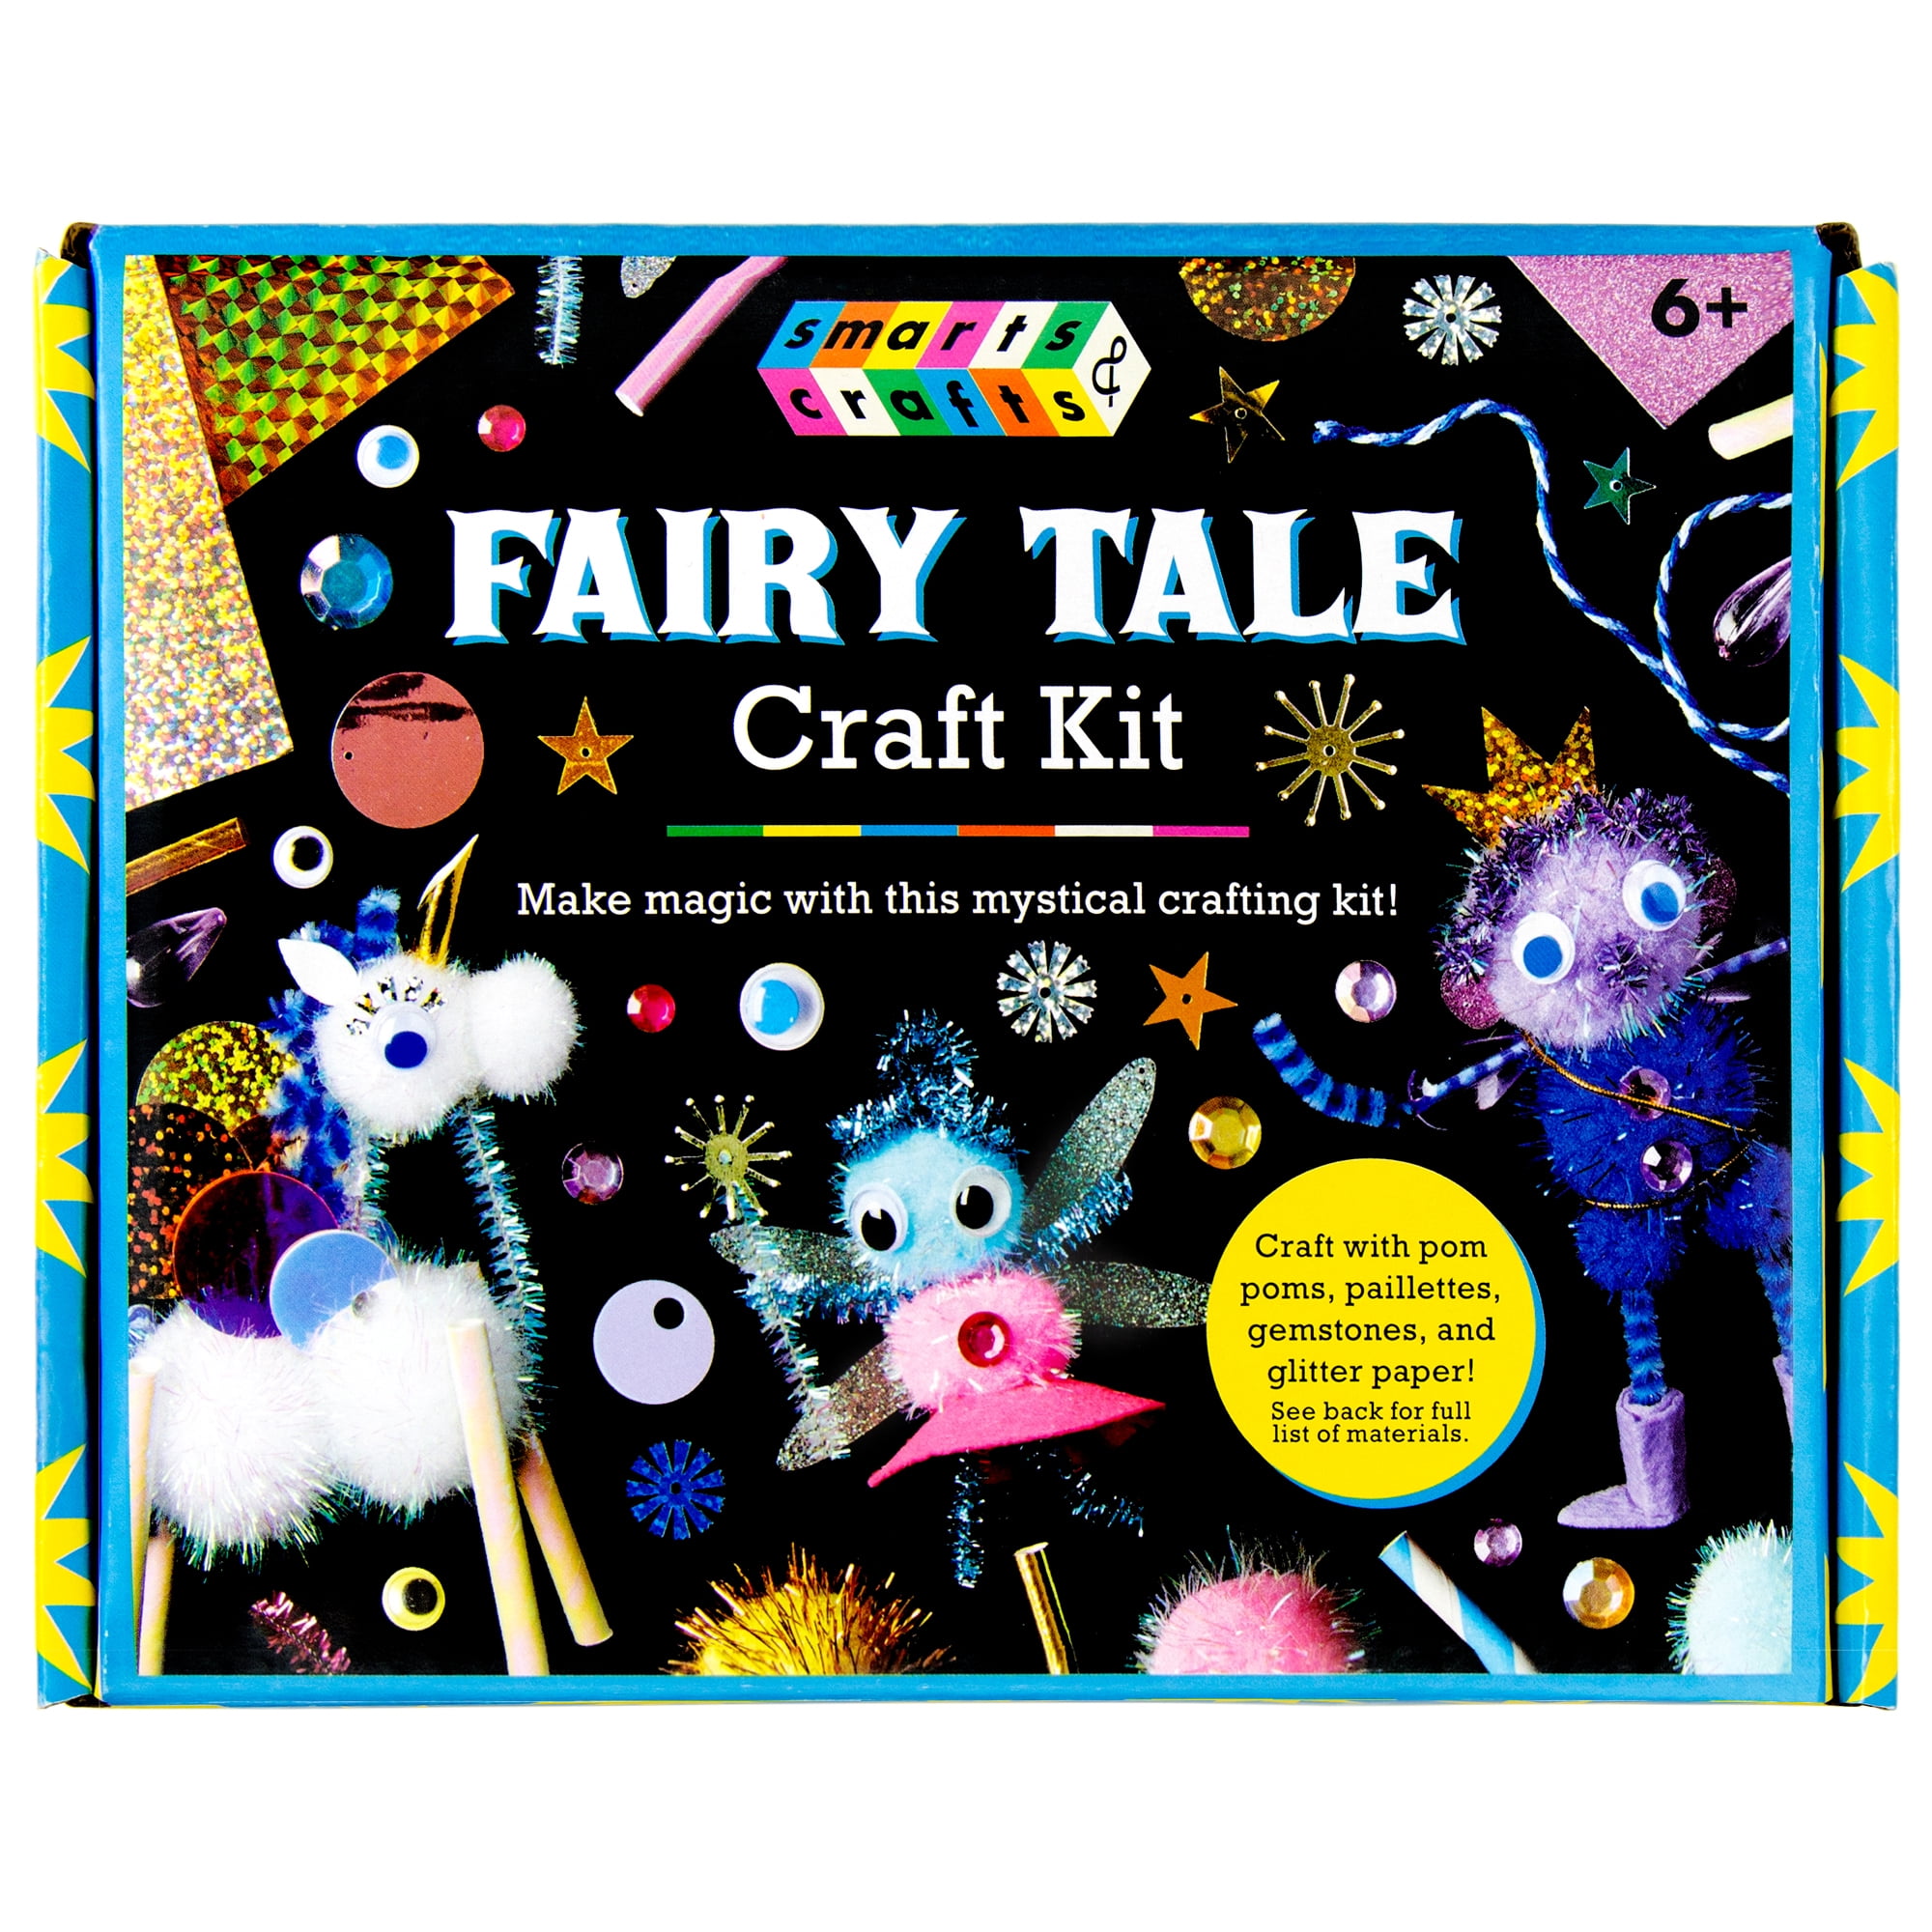 3 in 1 diamond sticker set Fairy Mermaid  Kids Craft  Play Make Learn Girls New 